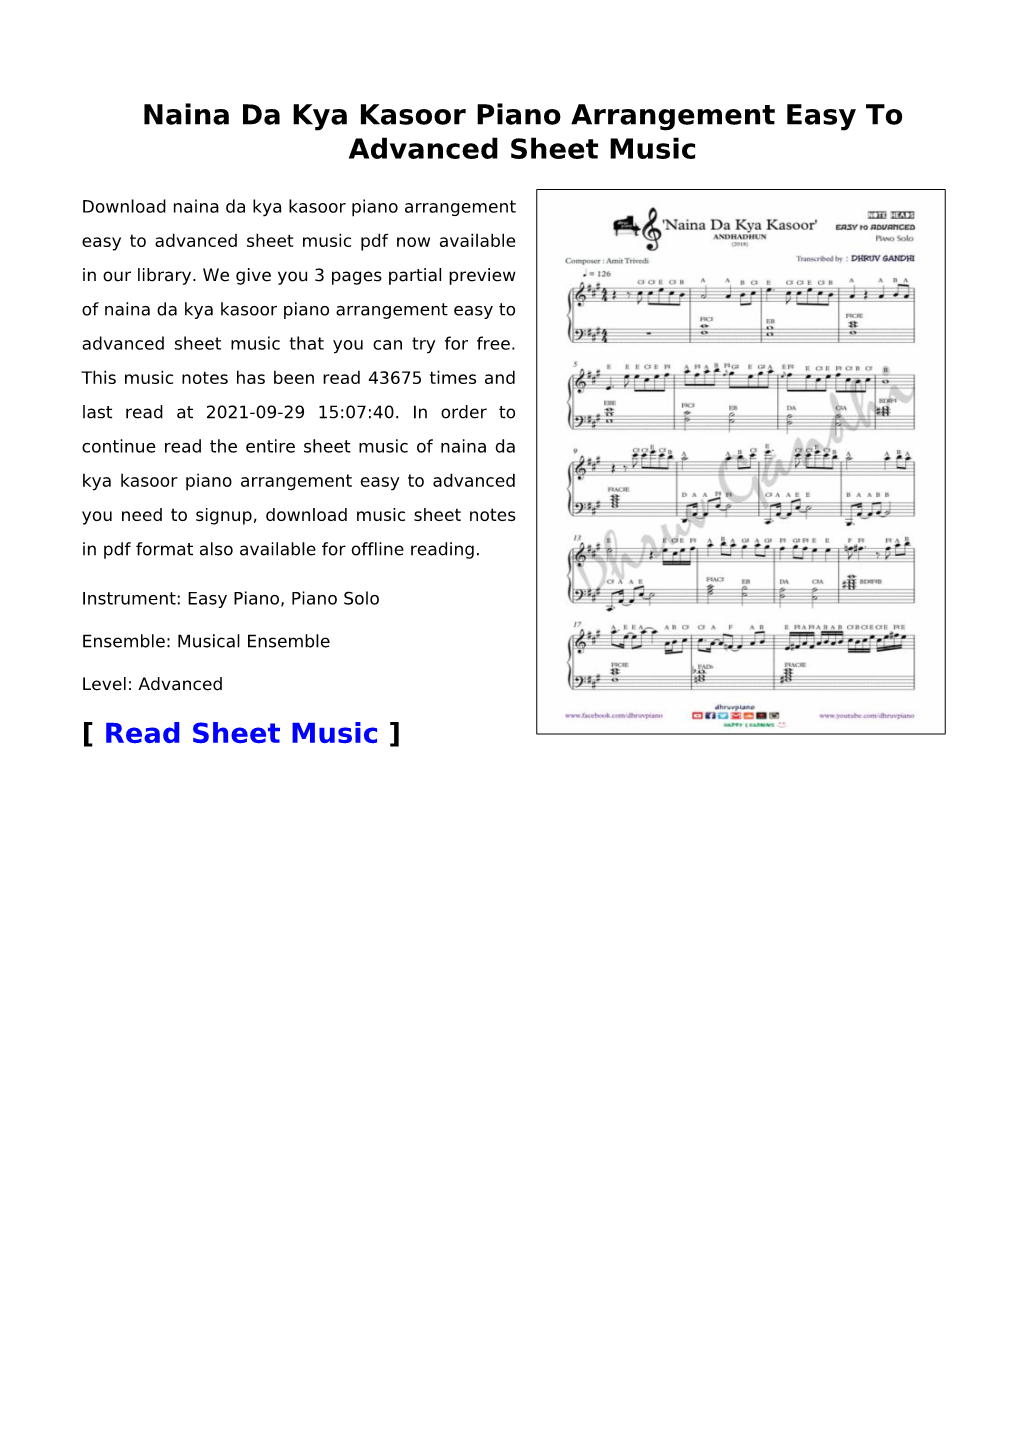 Naina Da Kya Kasoor Piano Arrangement Easy to Advanced Sheet Music